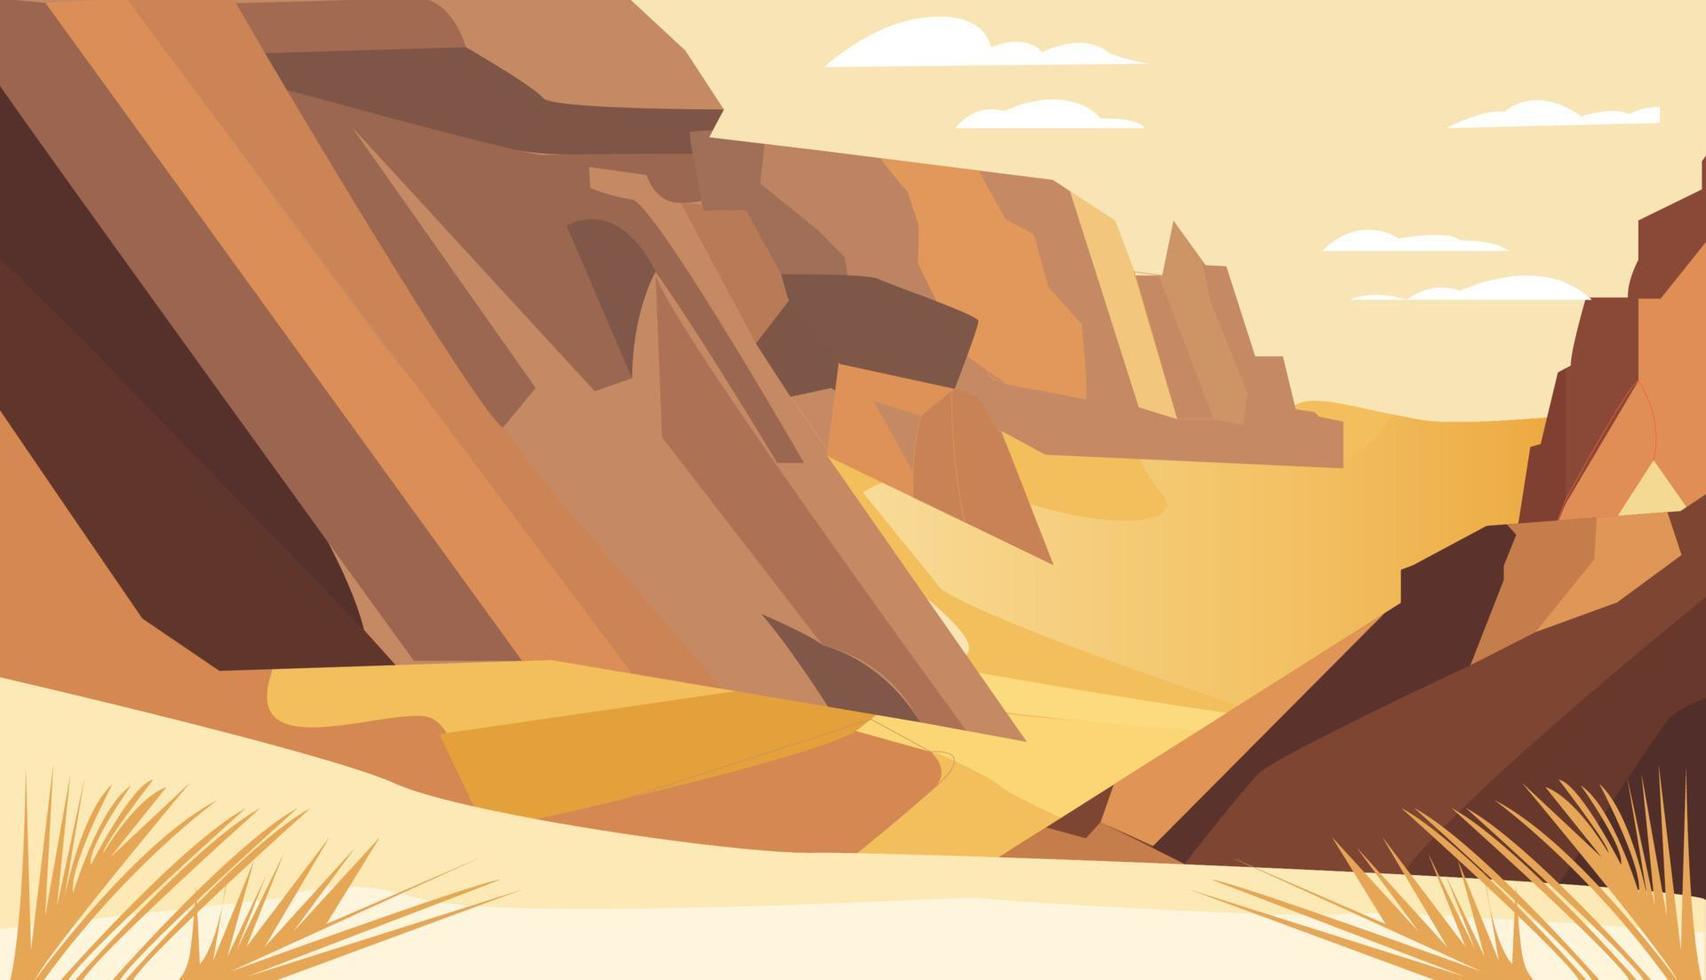 Rock mountain desert flat illustration vector